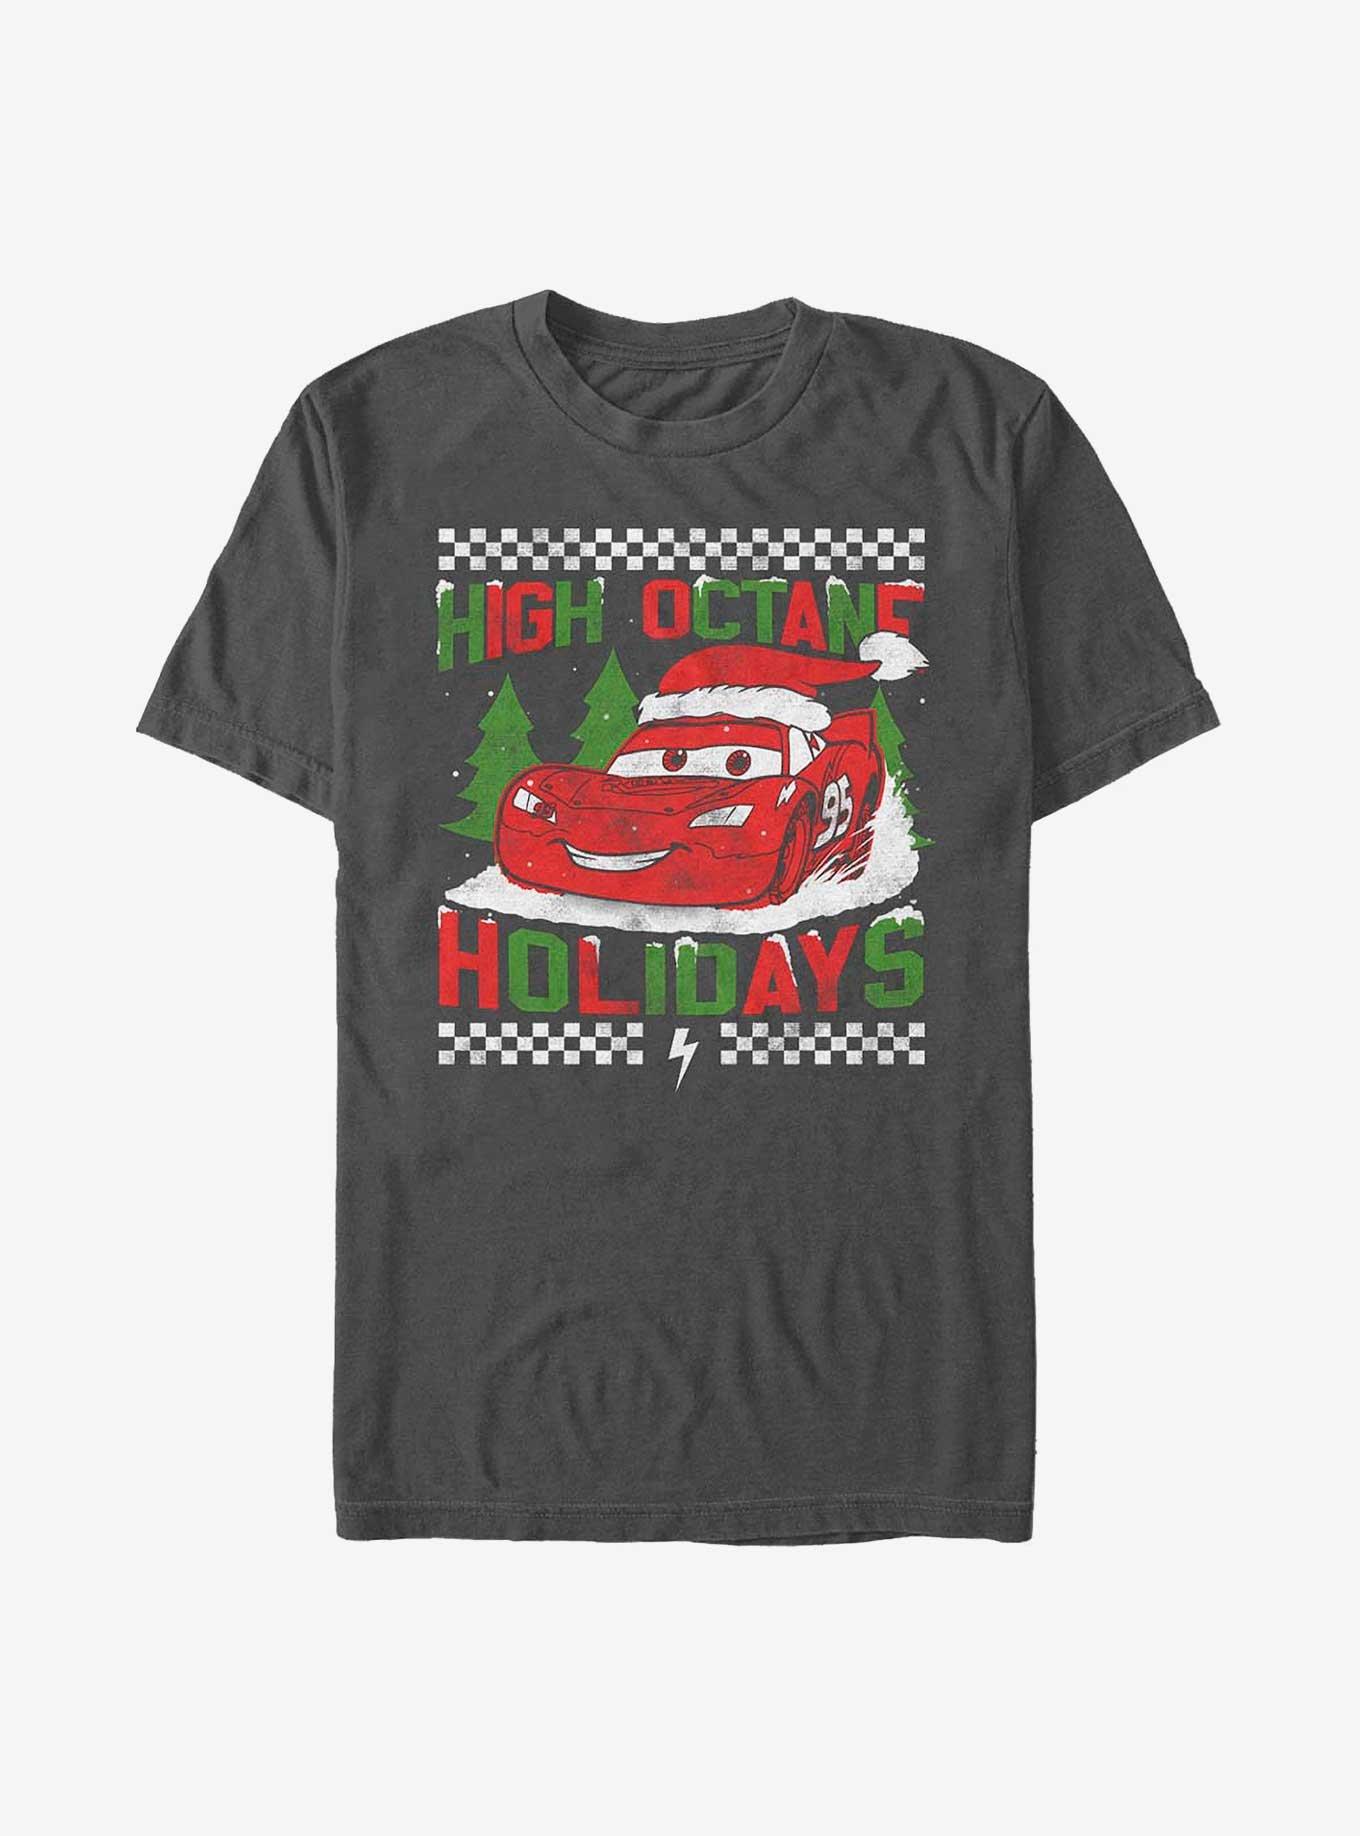 Disney Pixar Cars High Octane Holidays T-Shirt